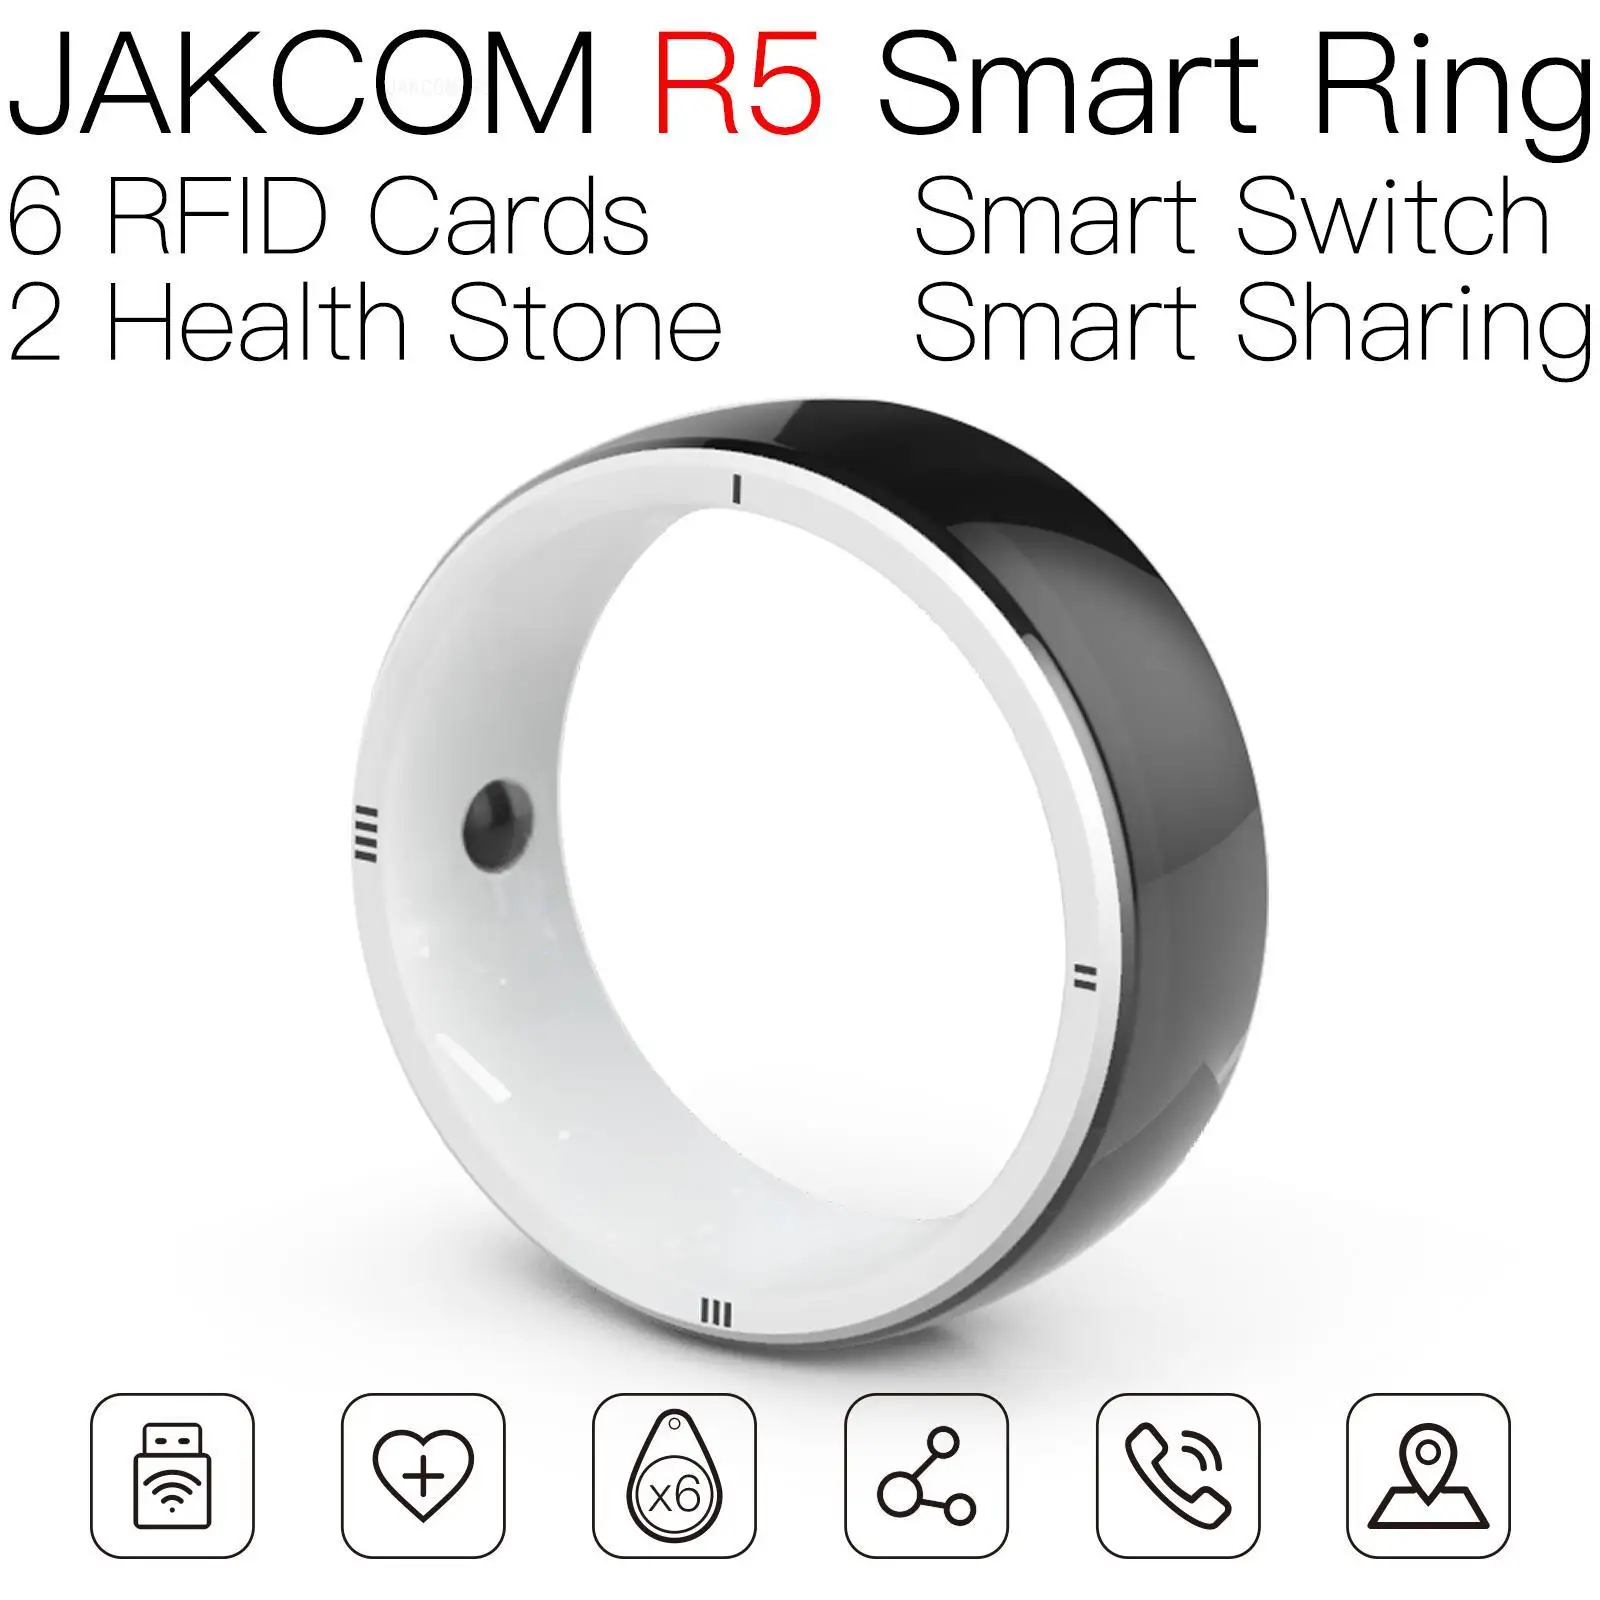 

JAKCOM R5 Smart Ring better than nfc smart watch men series 8 icu vet pet pvc card with contact chip acri122 read witer